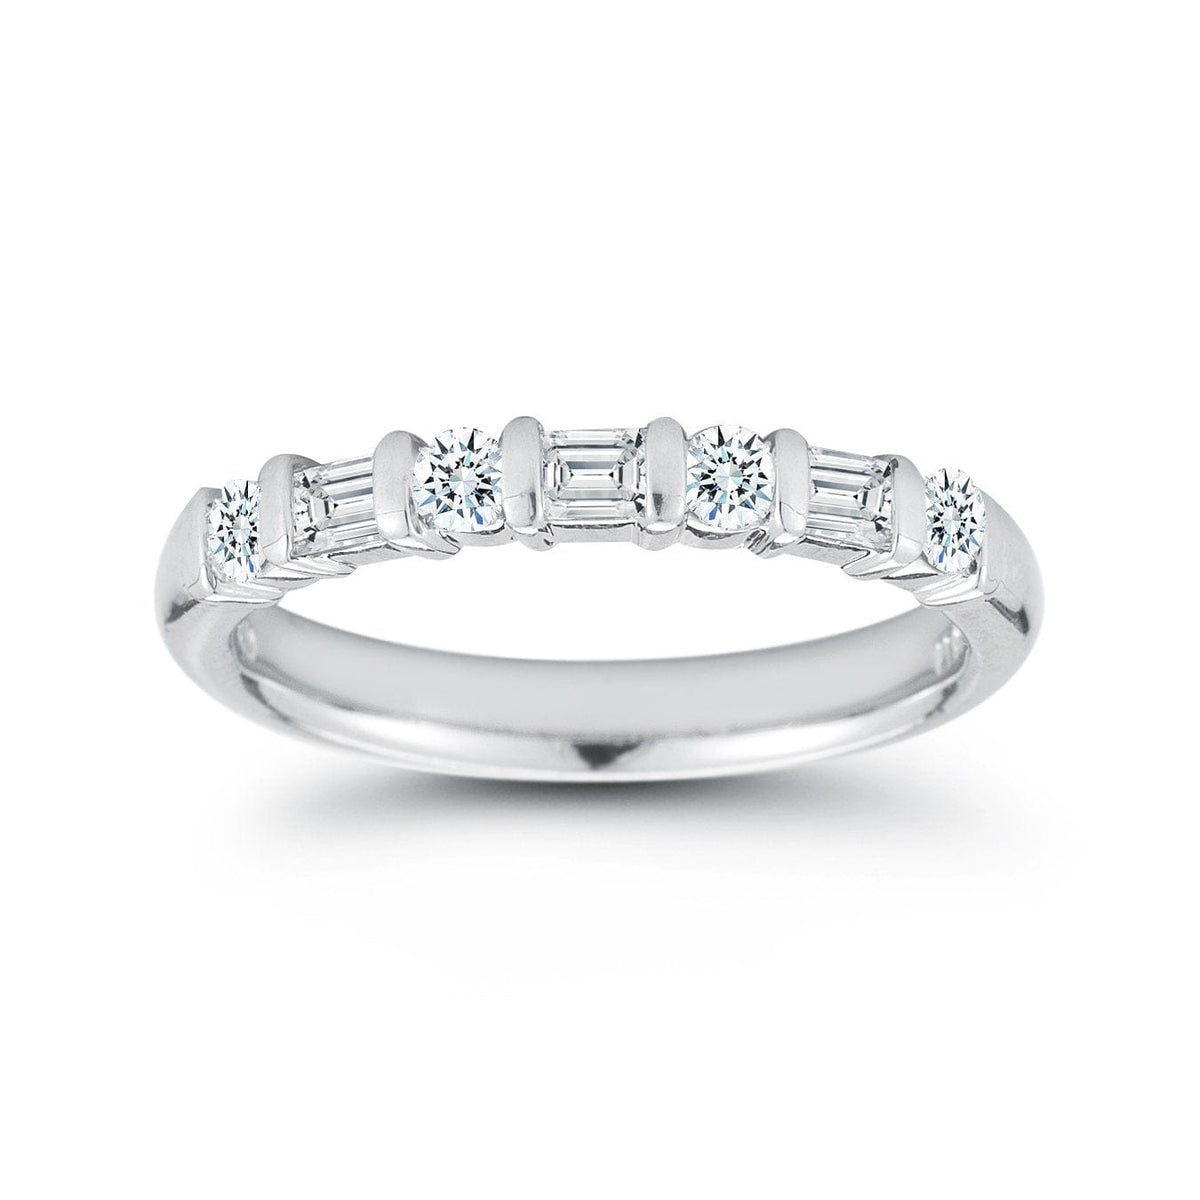 Platinum Alternating Round and Baguette Cut Diamond Wedding Ring